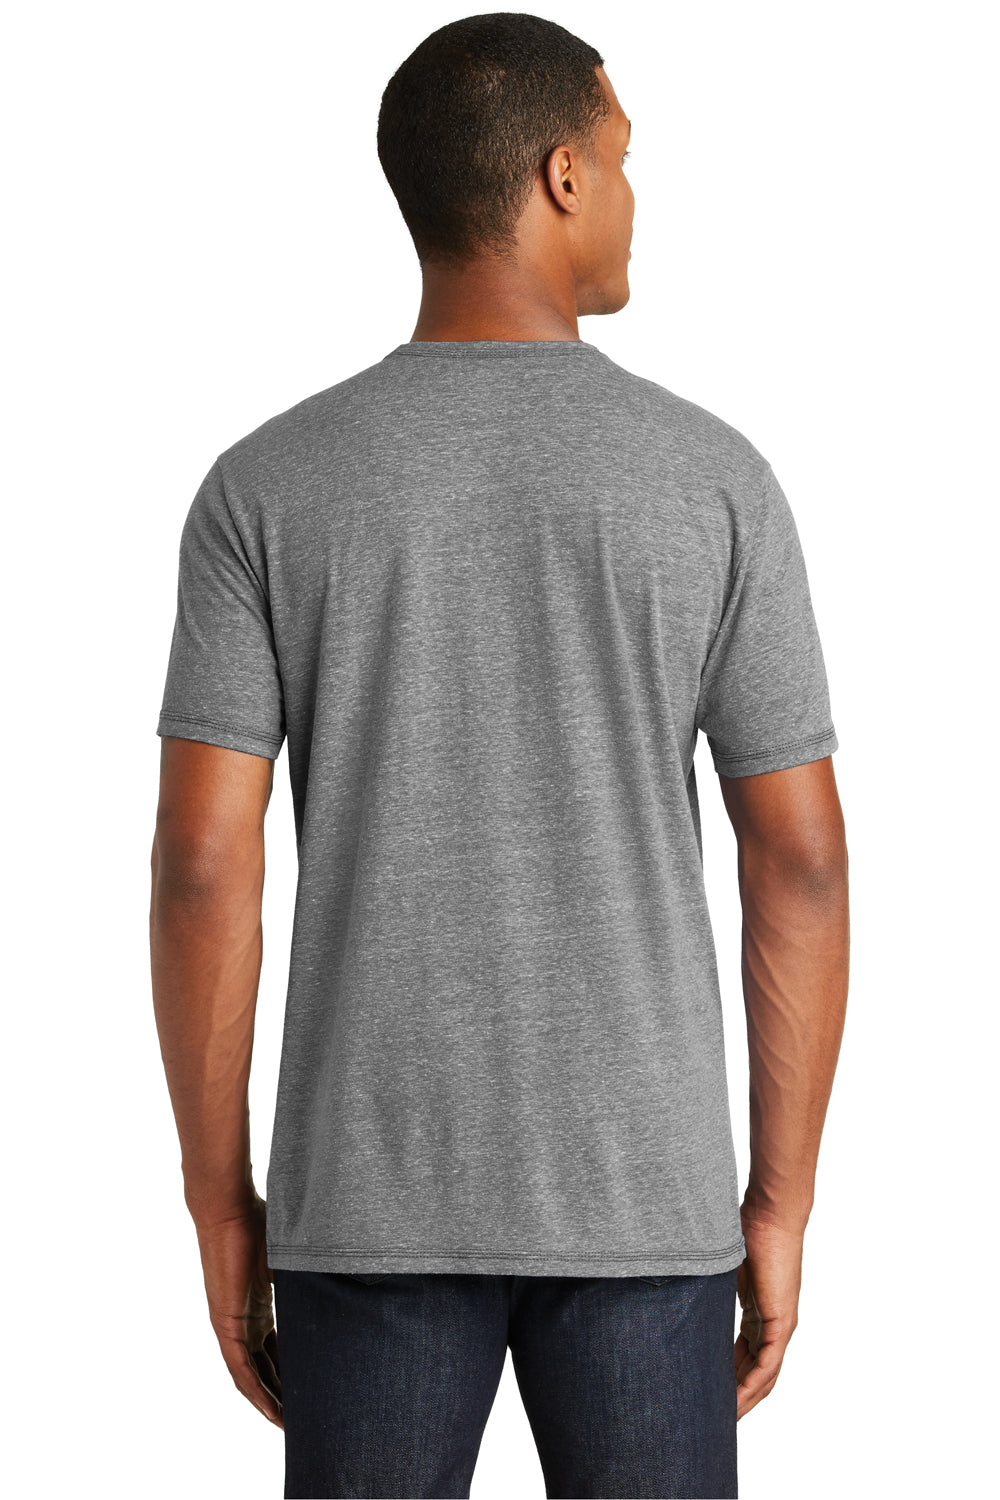 New Era NEA130 Mens Performance Moisture Wicking Short Sleeve Crewneck T-Shirt Shadow Grey Back